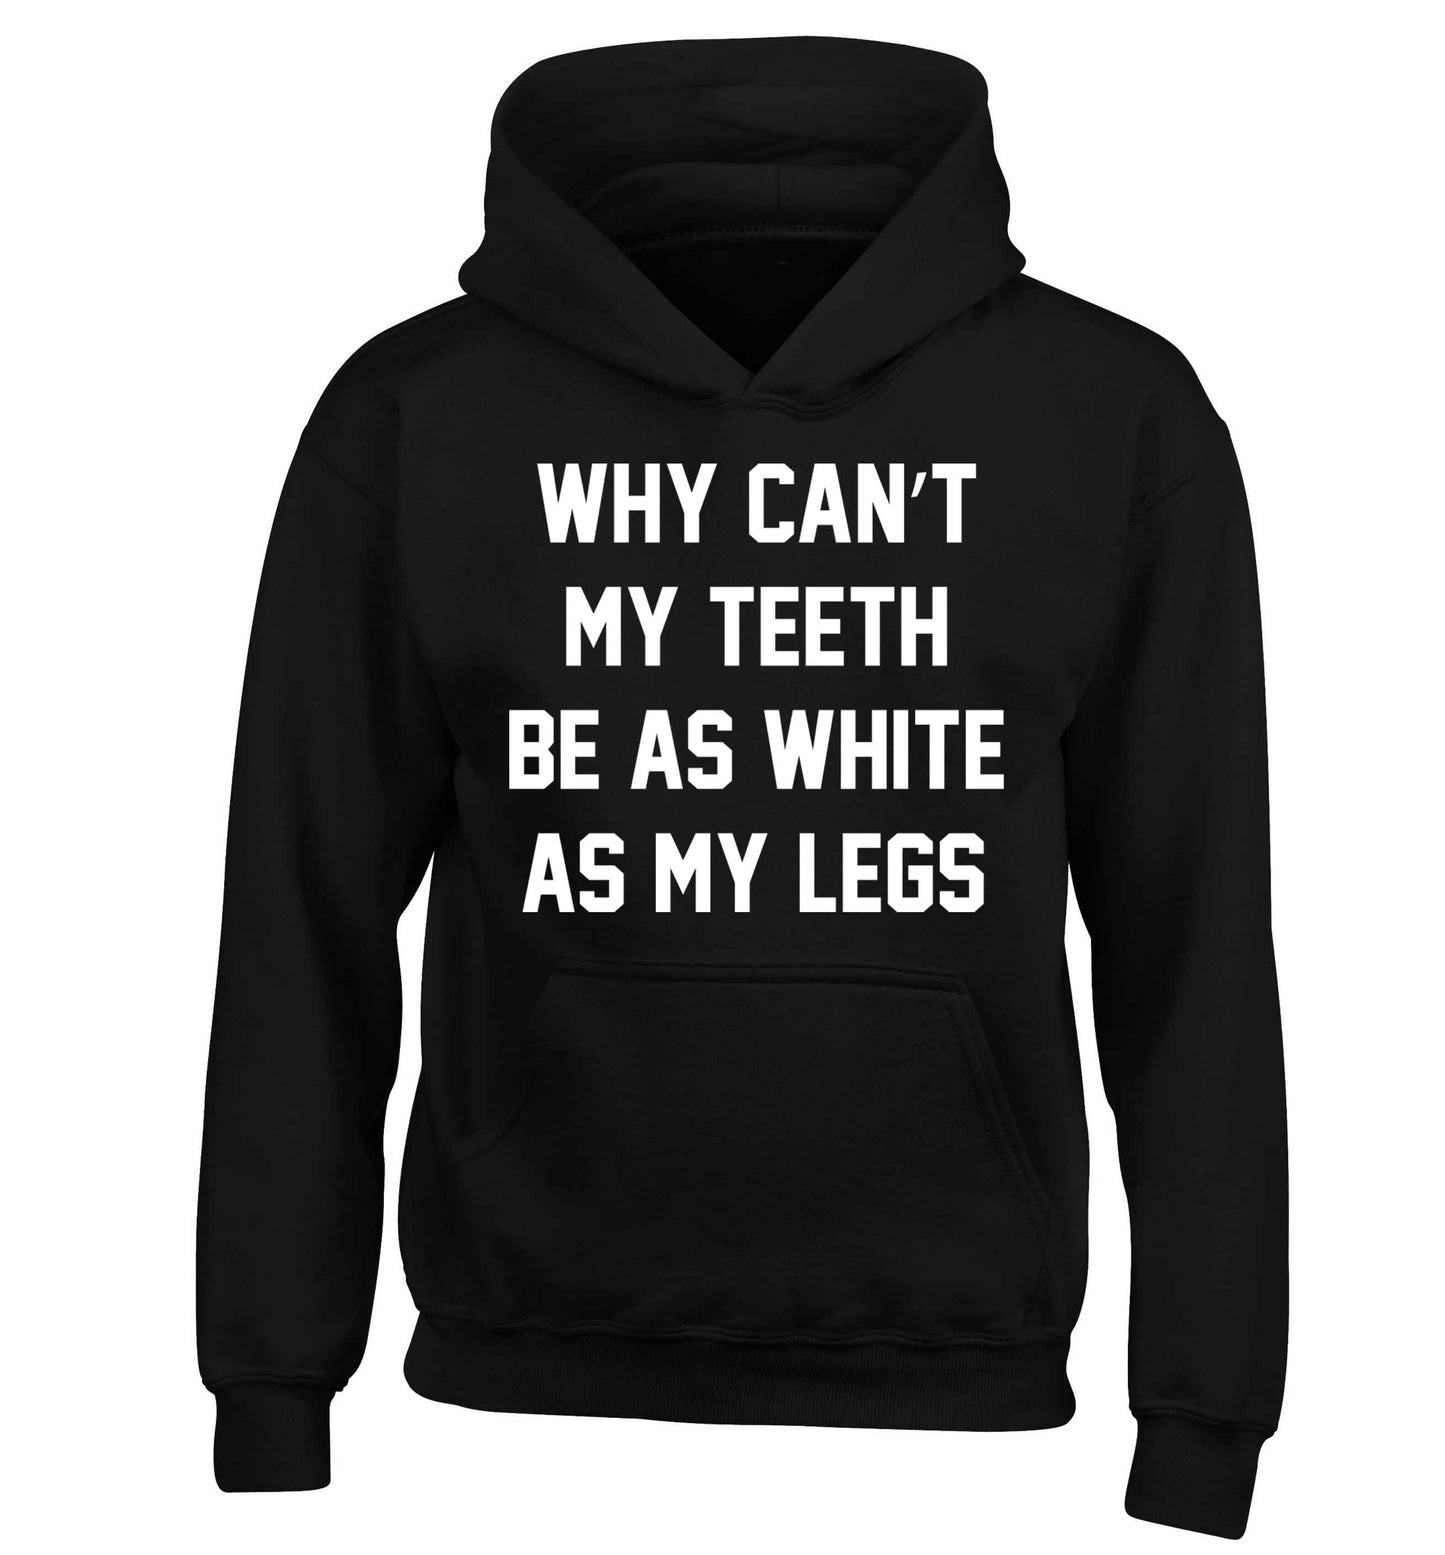 Why can't my teeth be as white as my legs children's black hoodie 12-13 Years